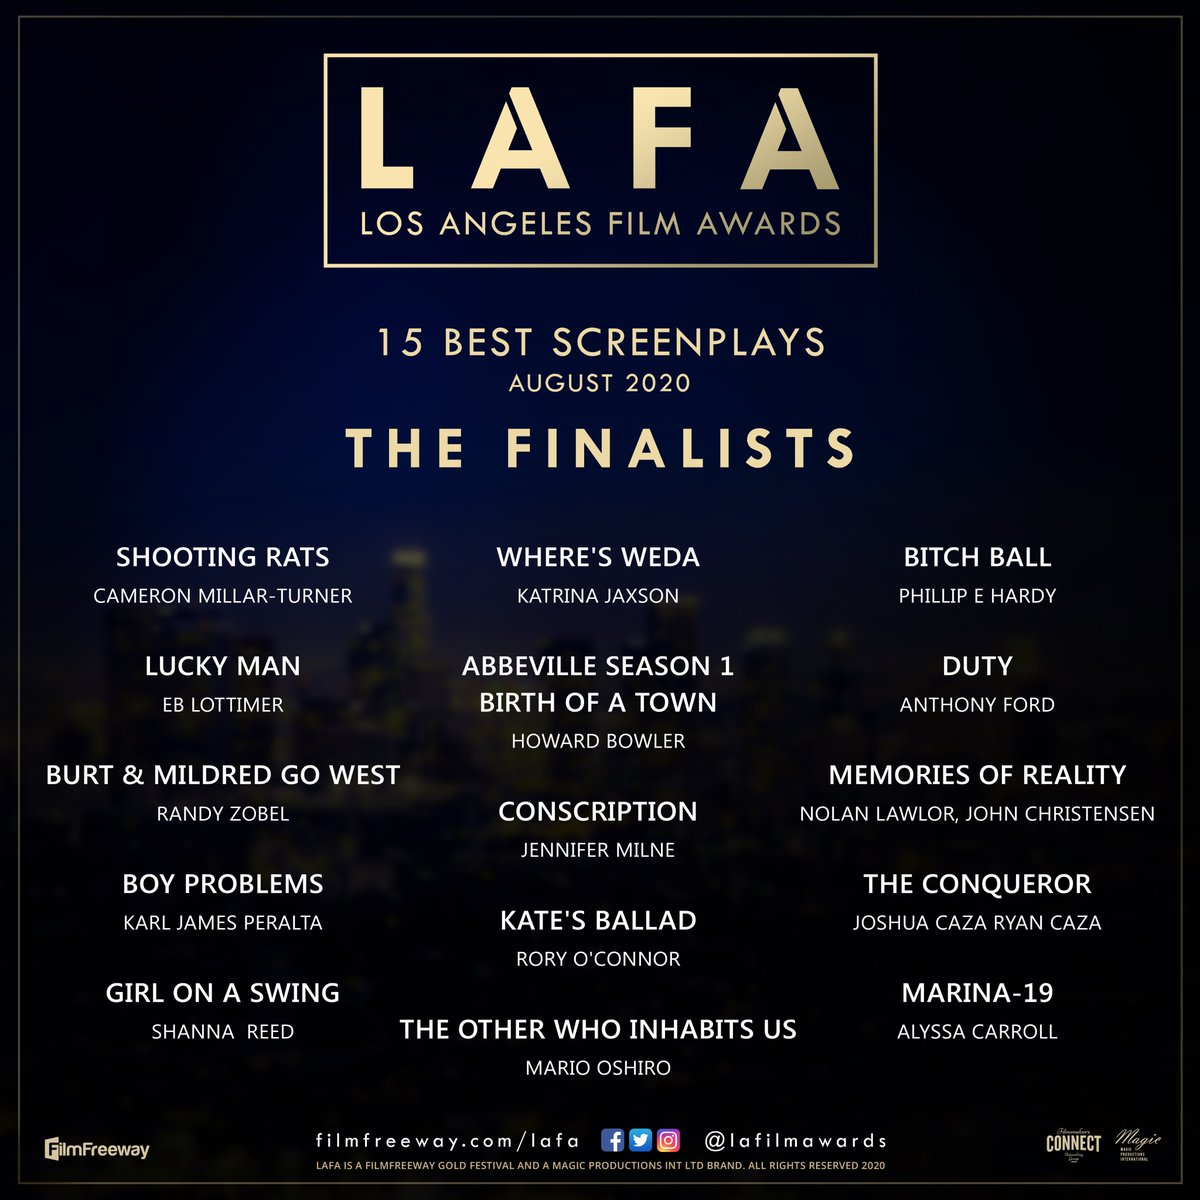 LAFA Screenplay Finalists! filmfreeway.com/lafa #losangelesfilmawards #lafa #lafa20 #lafilmawards #filmfestival #filmfreeway #imdb #magicint #filmcon #filmmakersconnect #15bestscreenplays #bestscreenplay